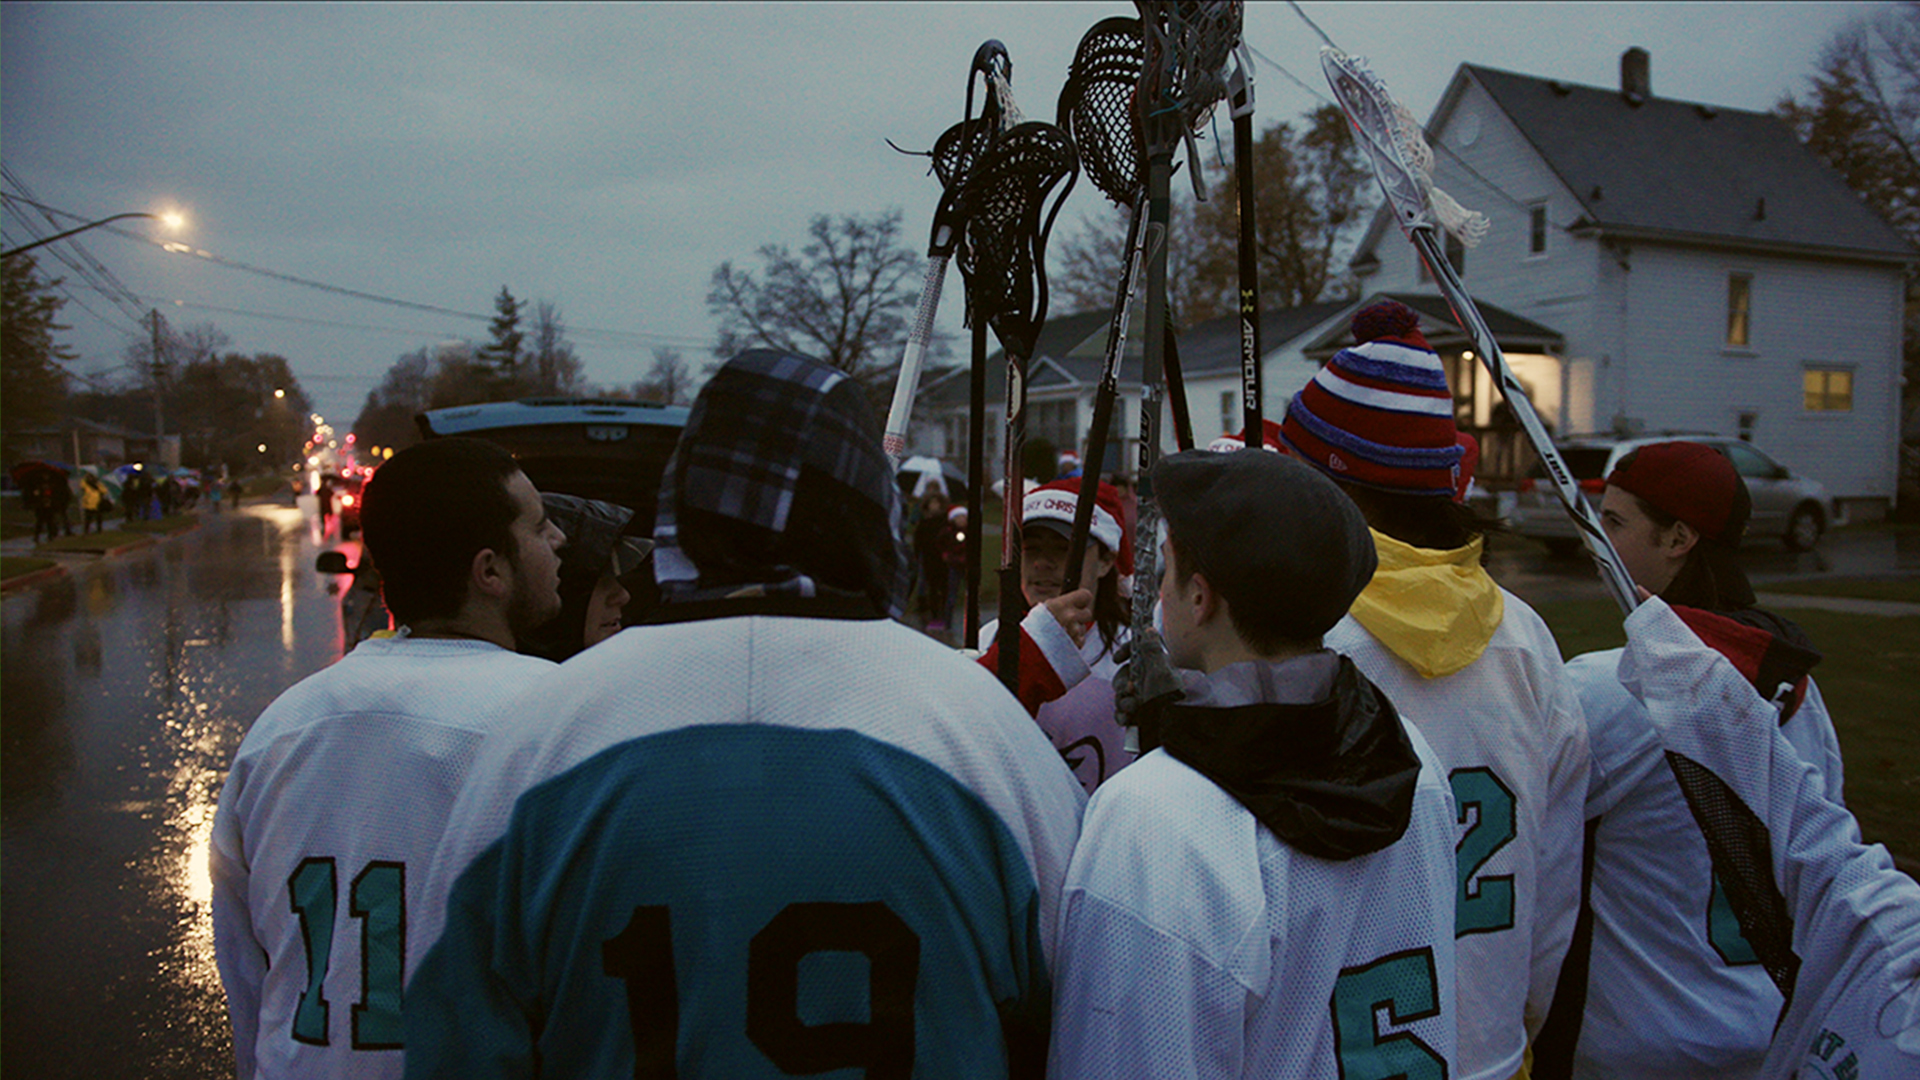 Urban.Indigenous.Proud: That Old Game Lacrosse